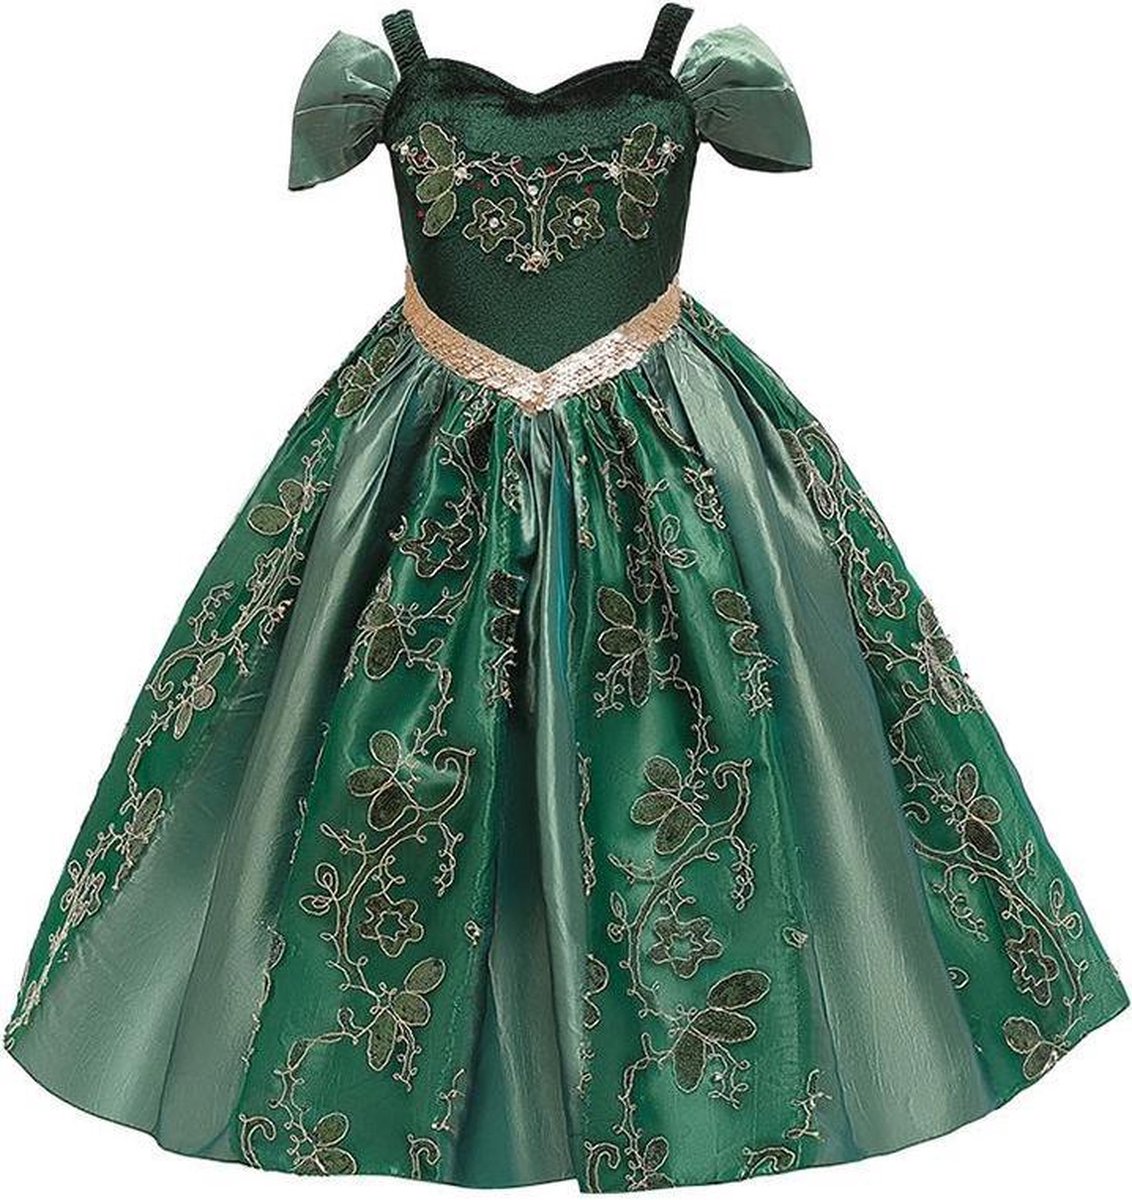 Prinses - Luxe Anna jurk - Frozen -  Prinsessenjurk - Verkleedkleding - Groen - Maat 98/104 (110) 2/3 jaar